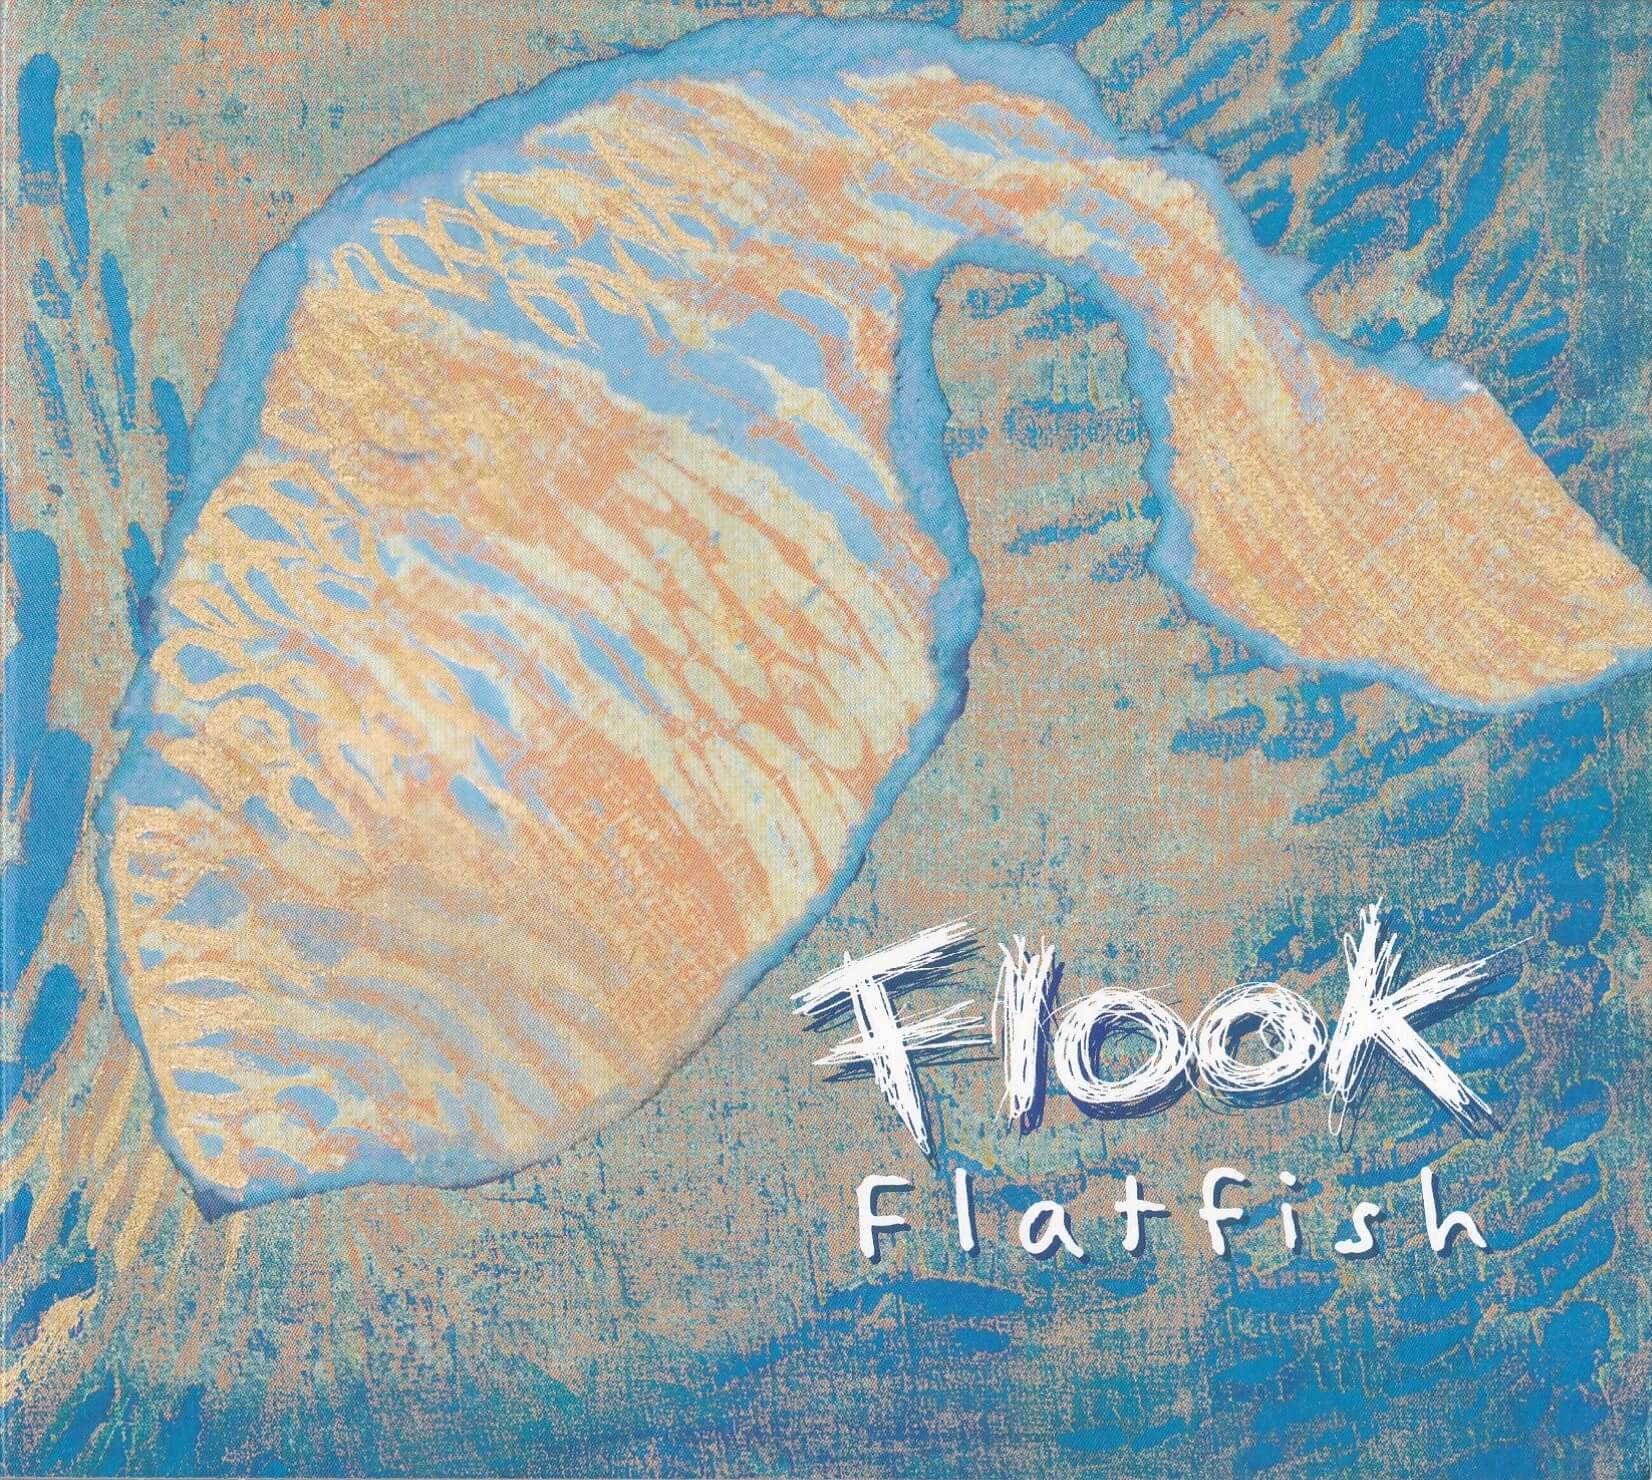 FlookのファーストアルバムFlatfish